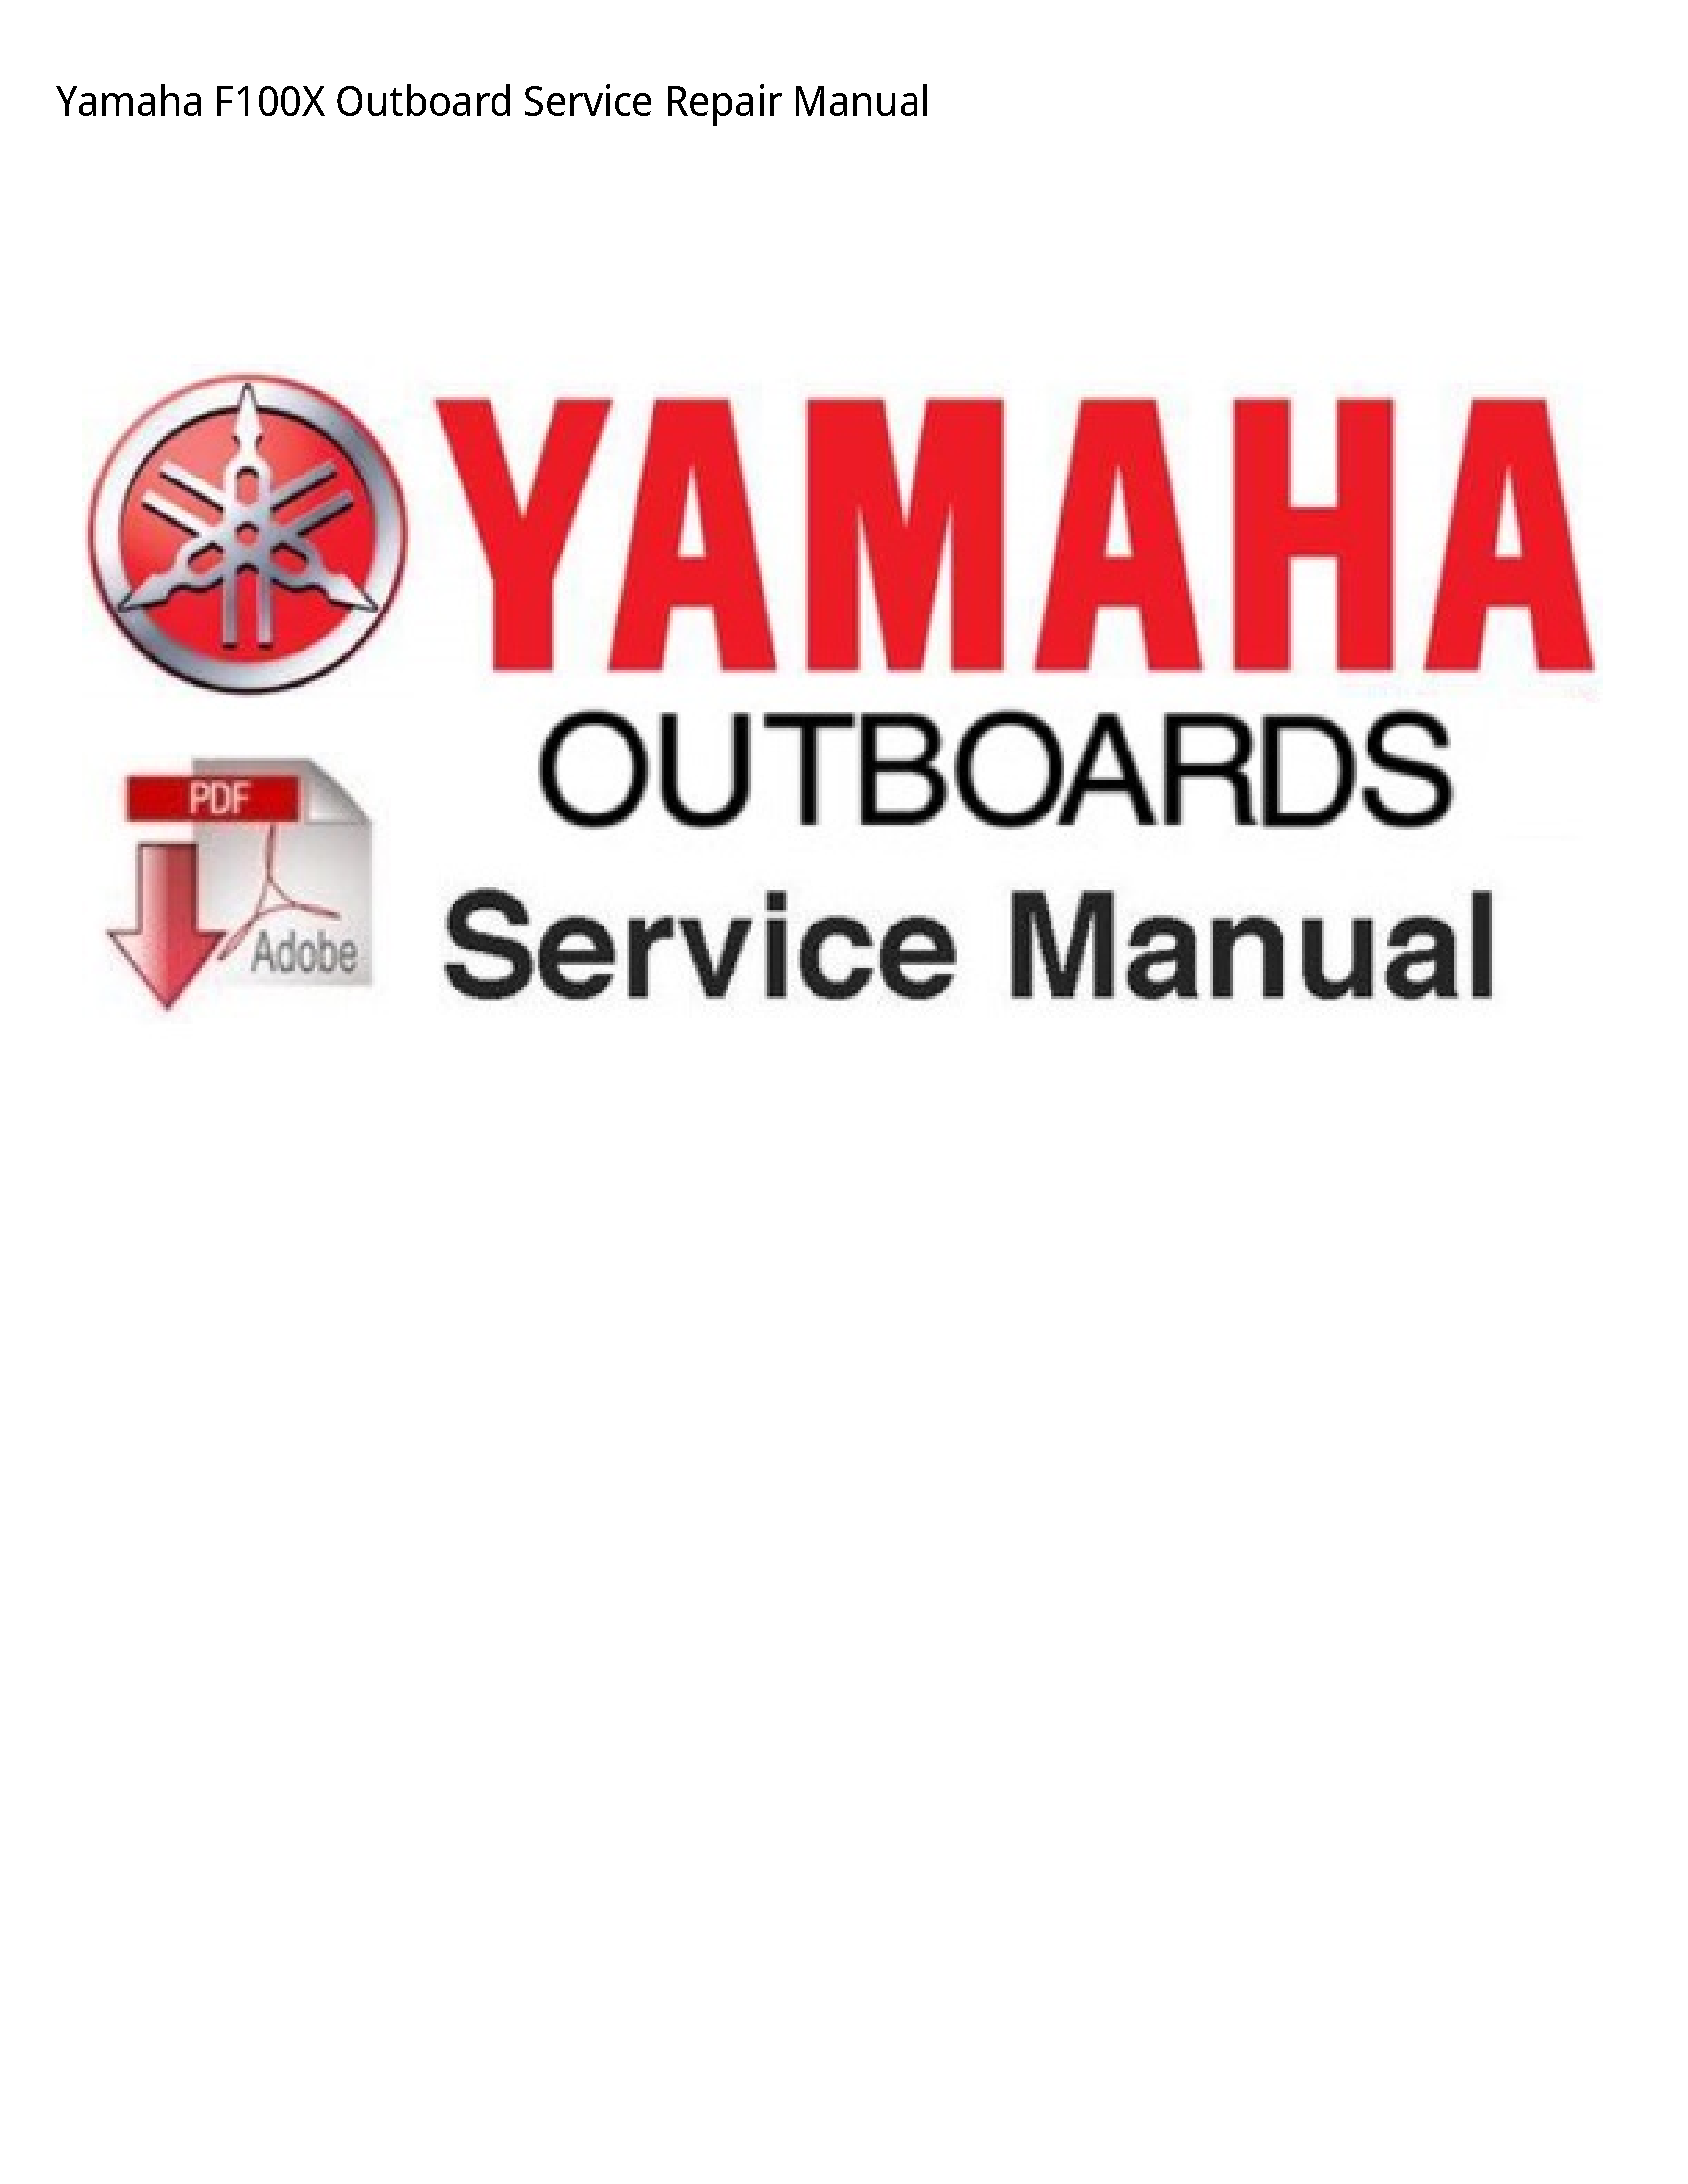 Yamaha F100X Outboard manual